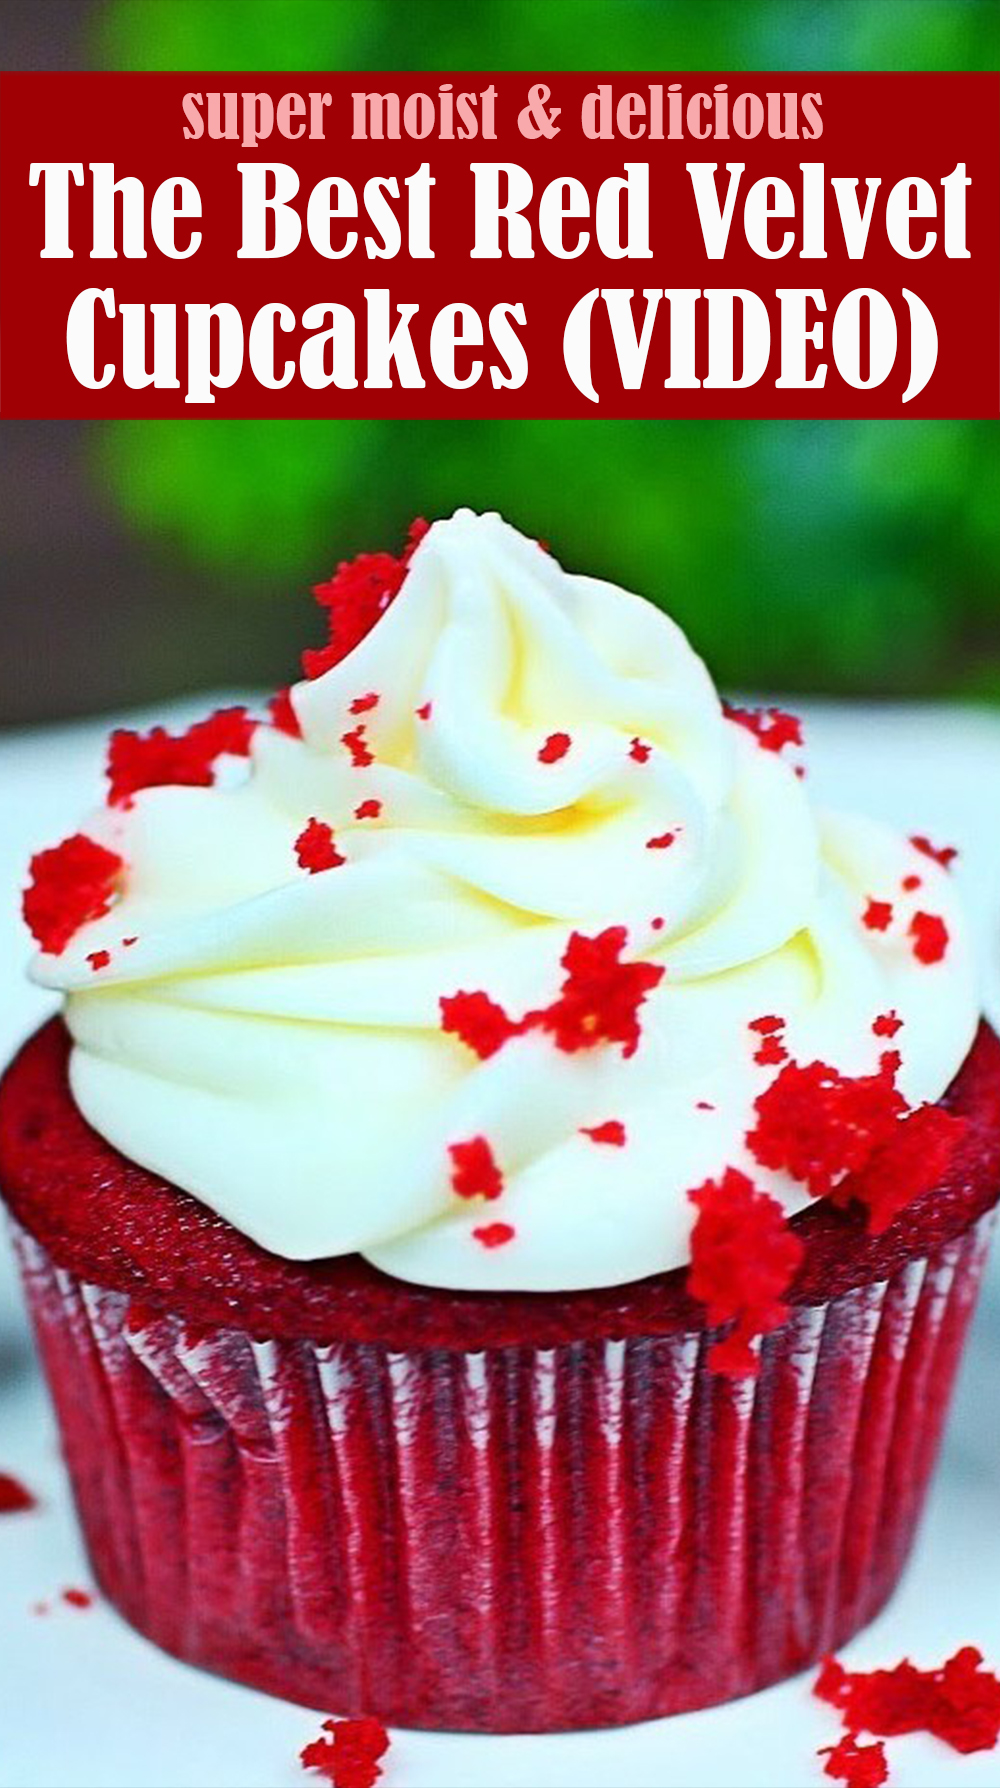 The Best Red Velvet Cupcakes Recipe